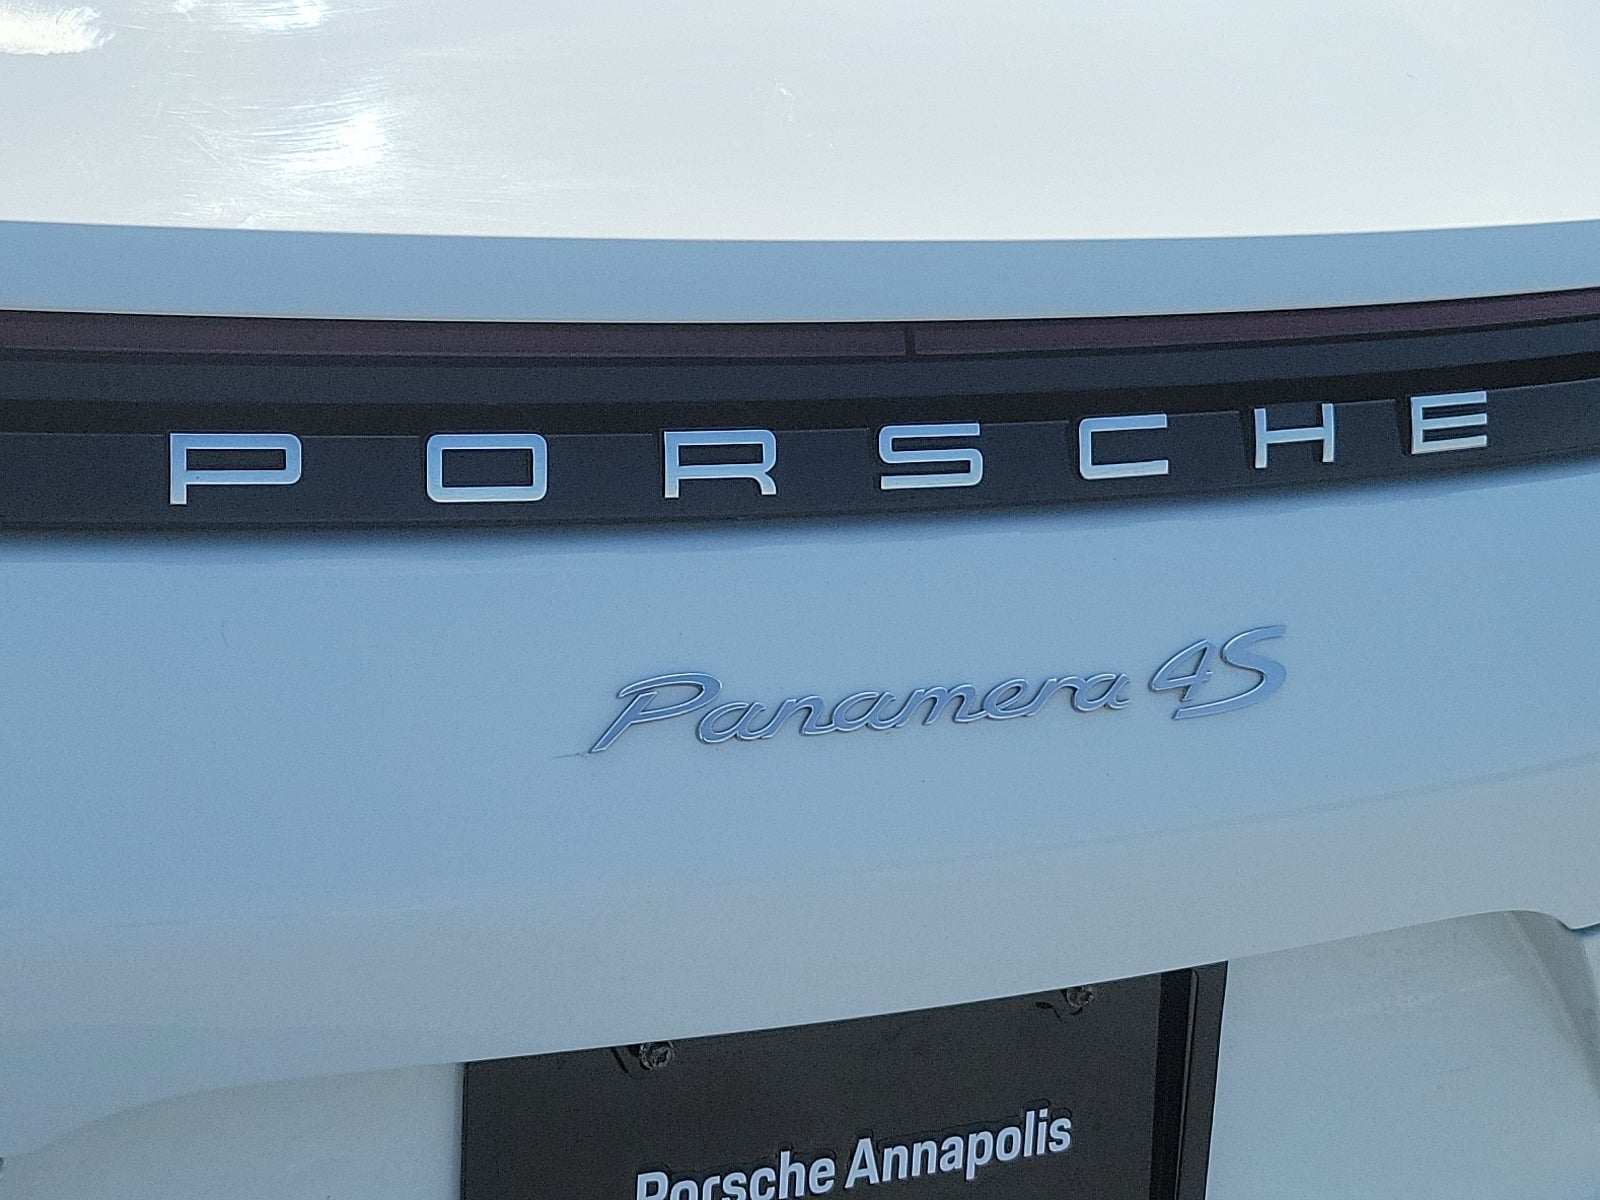 2020 Porsche Panamera 4S